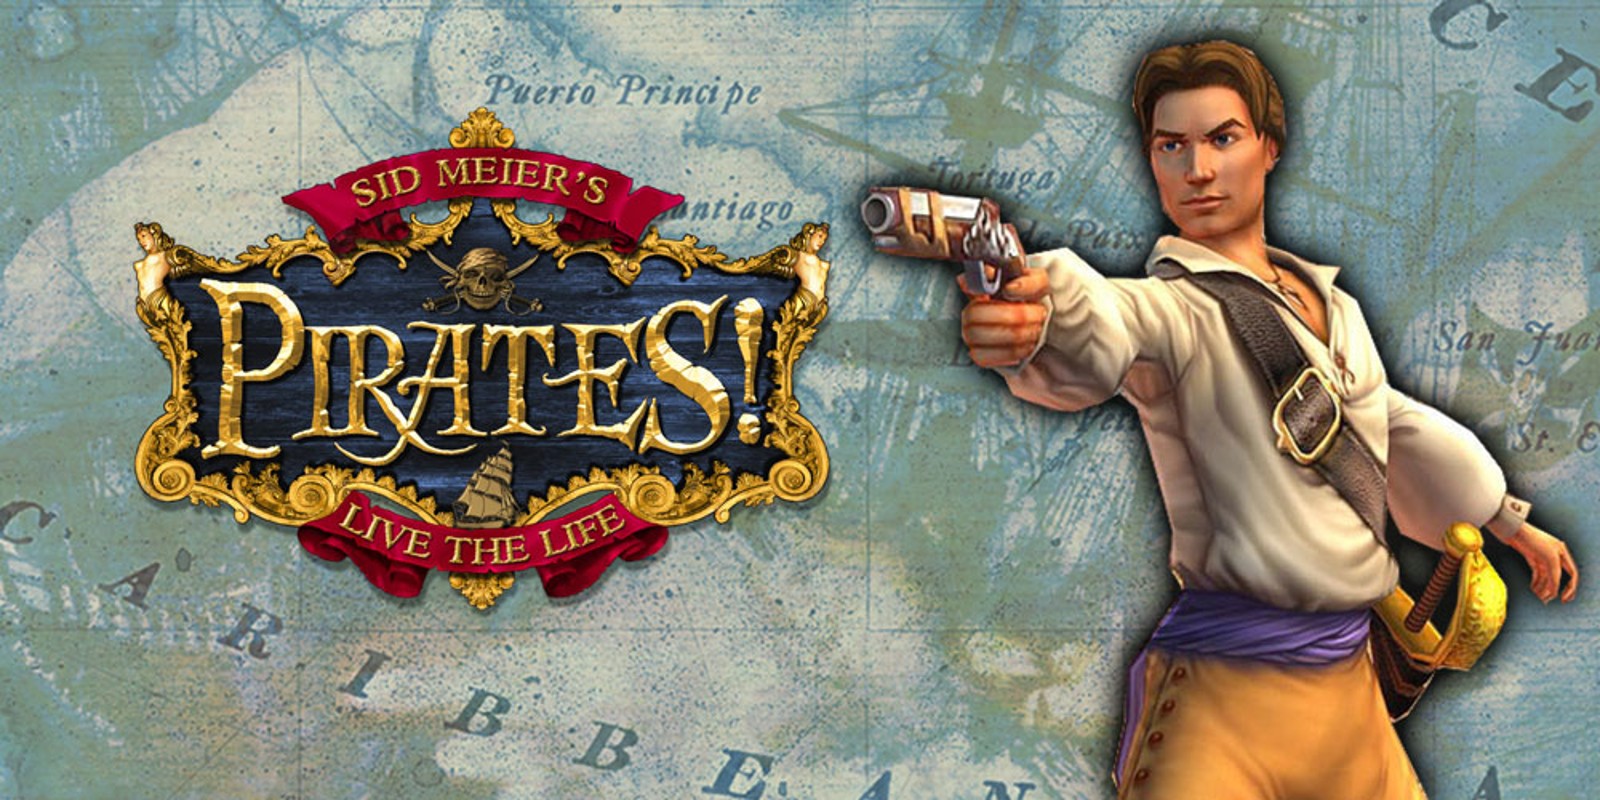 Sid Meier's Pirates! | Wii | Games | Nintendo